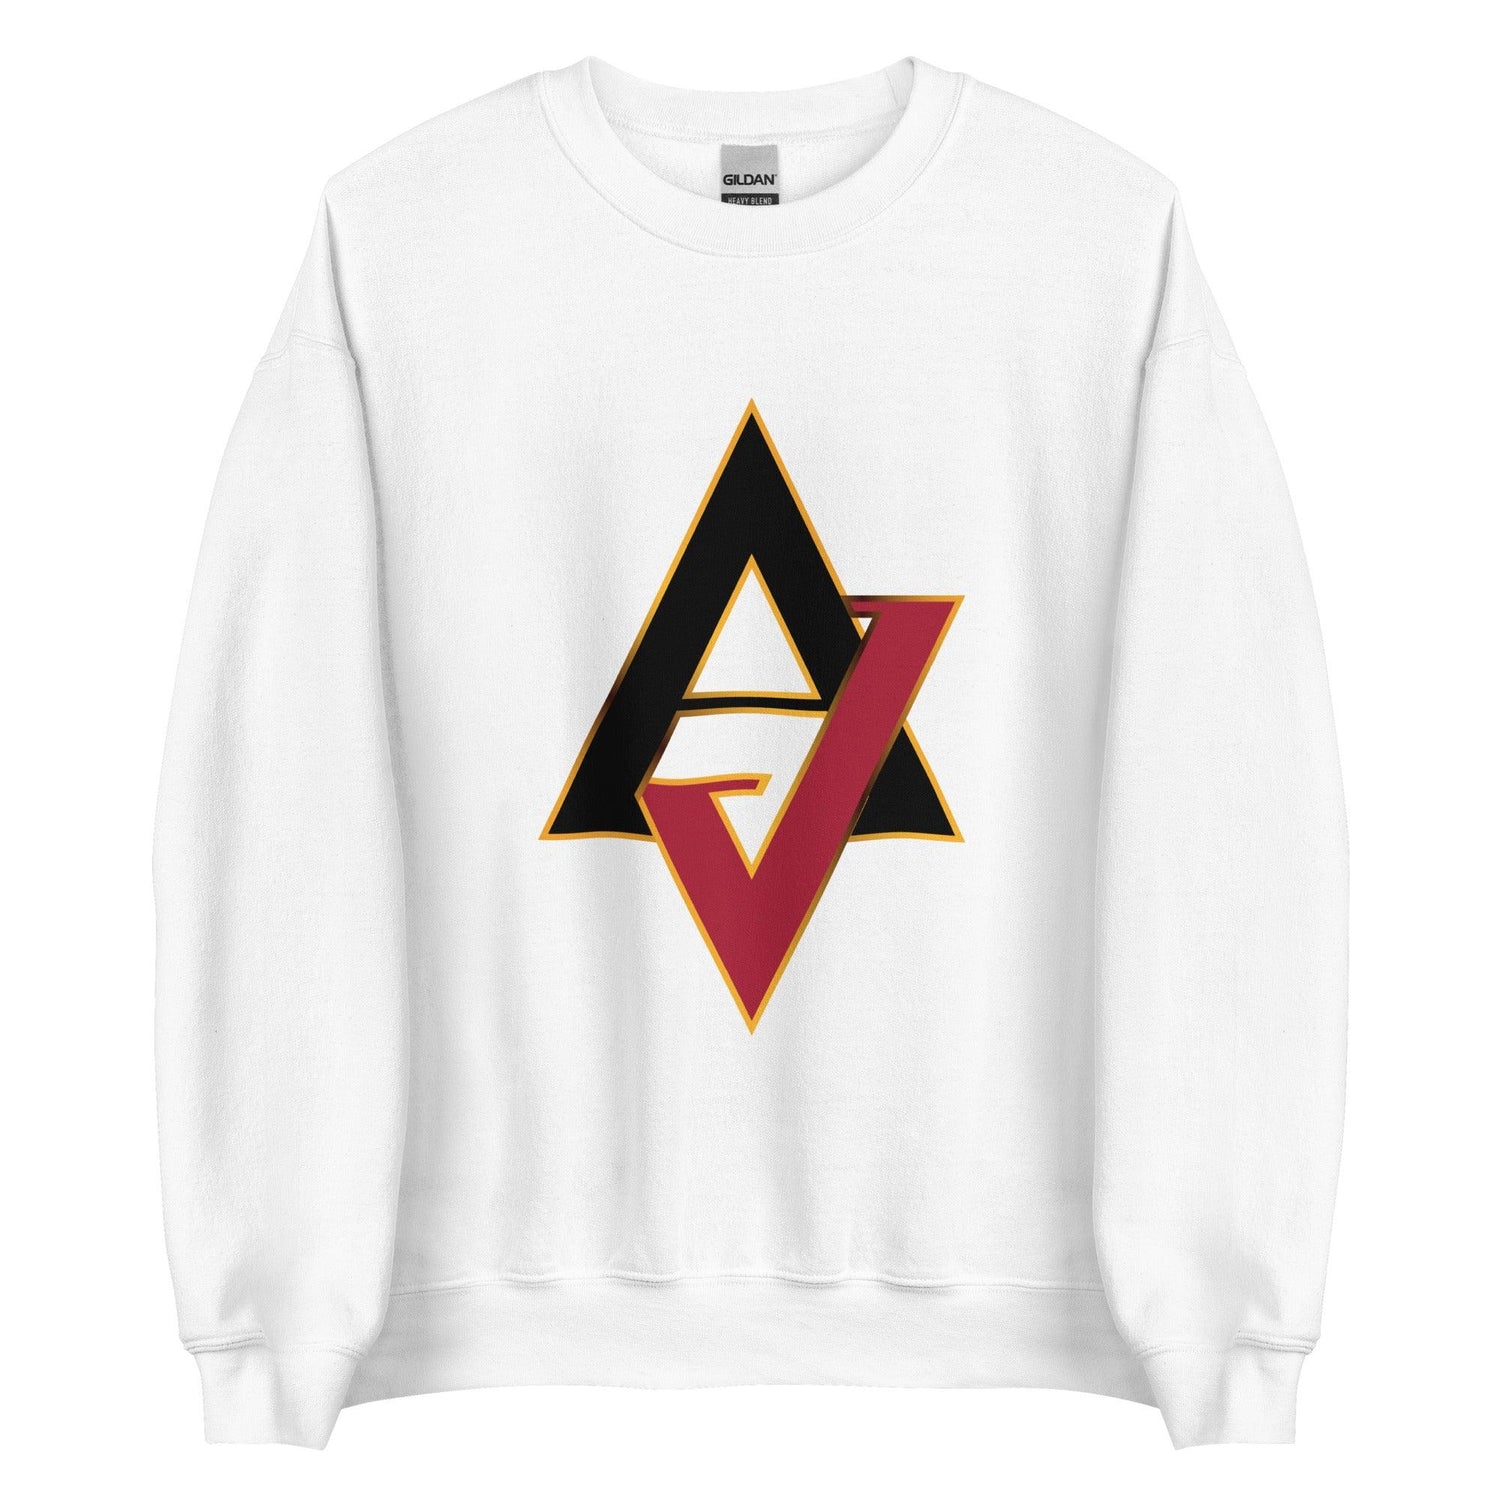 AJ Vukovich “Signature” Sweatshirt - Fan Arch